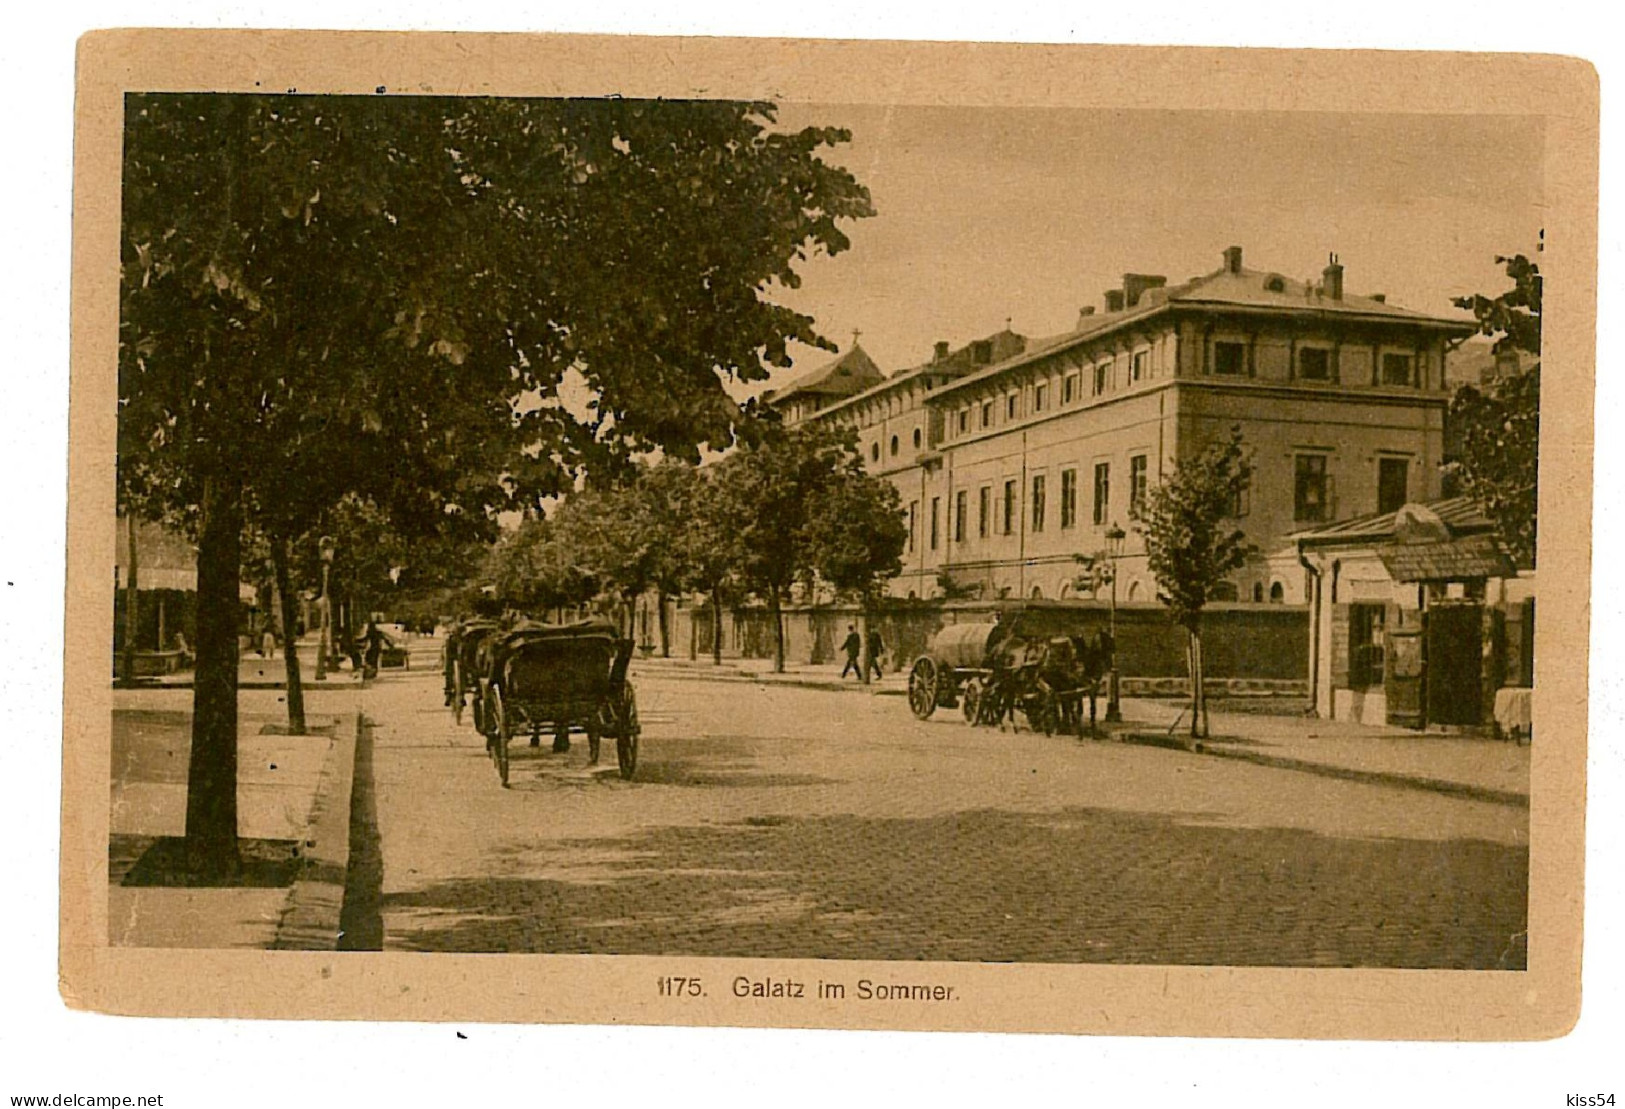 RO 40 - 1271 GALATI, Centrul, Caruta Si Trasuri, Romania - Old Postcard, CENSOR - Used - 1918 - Romania